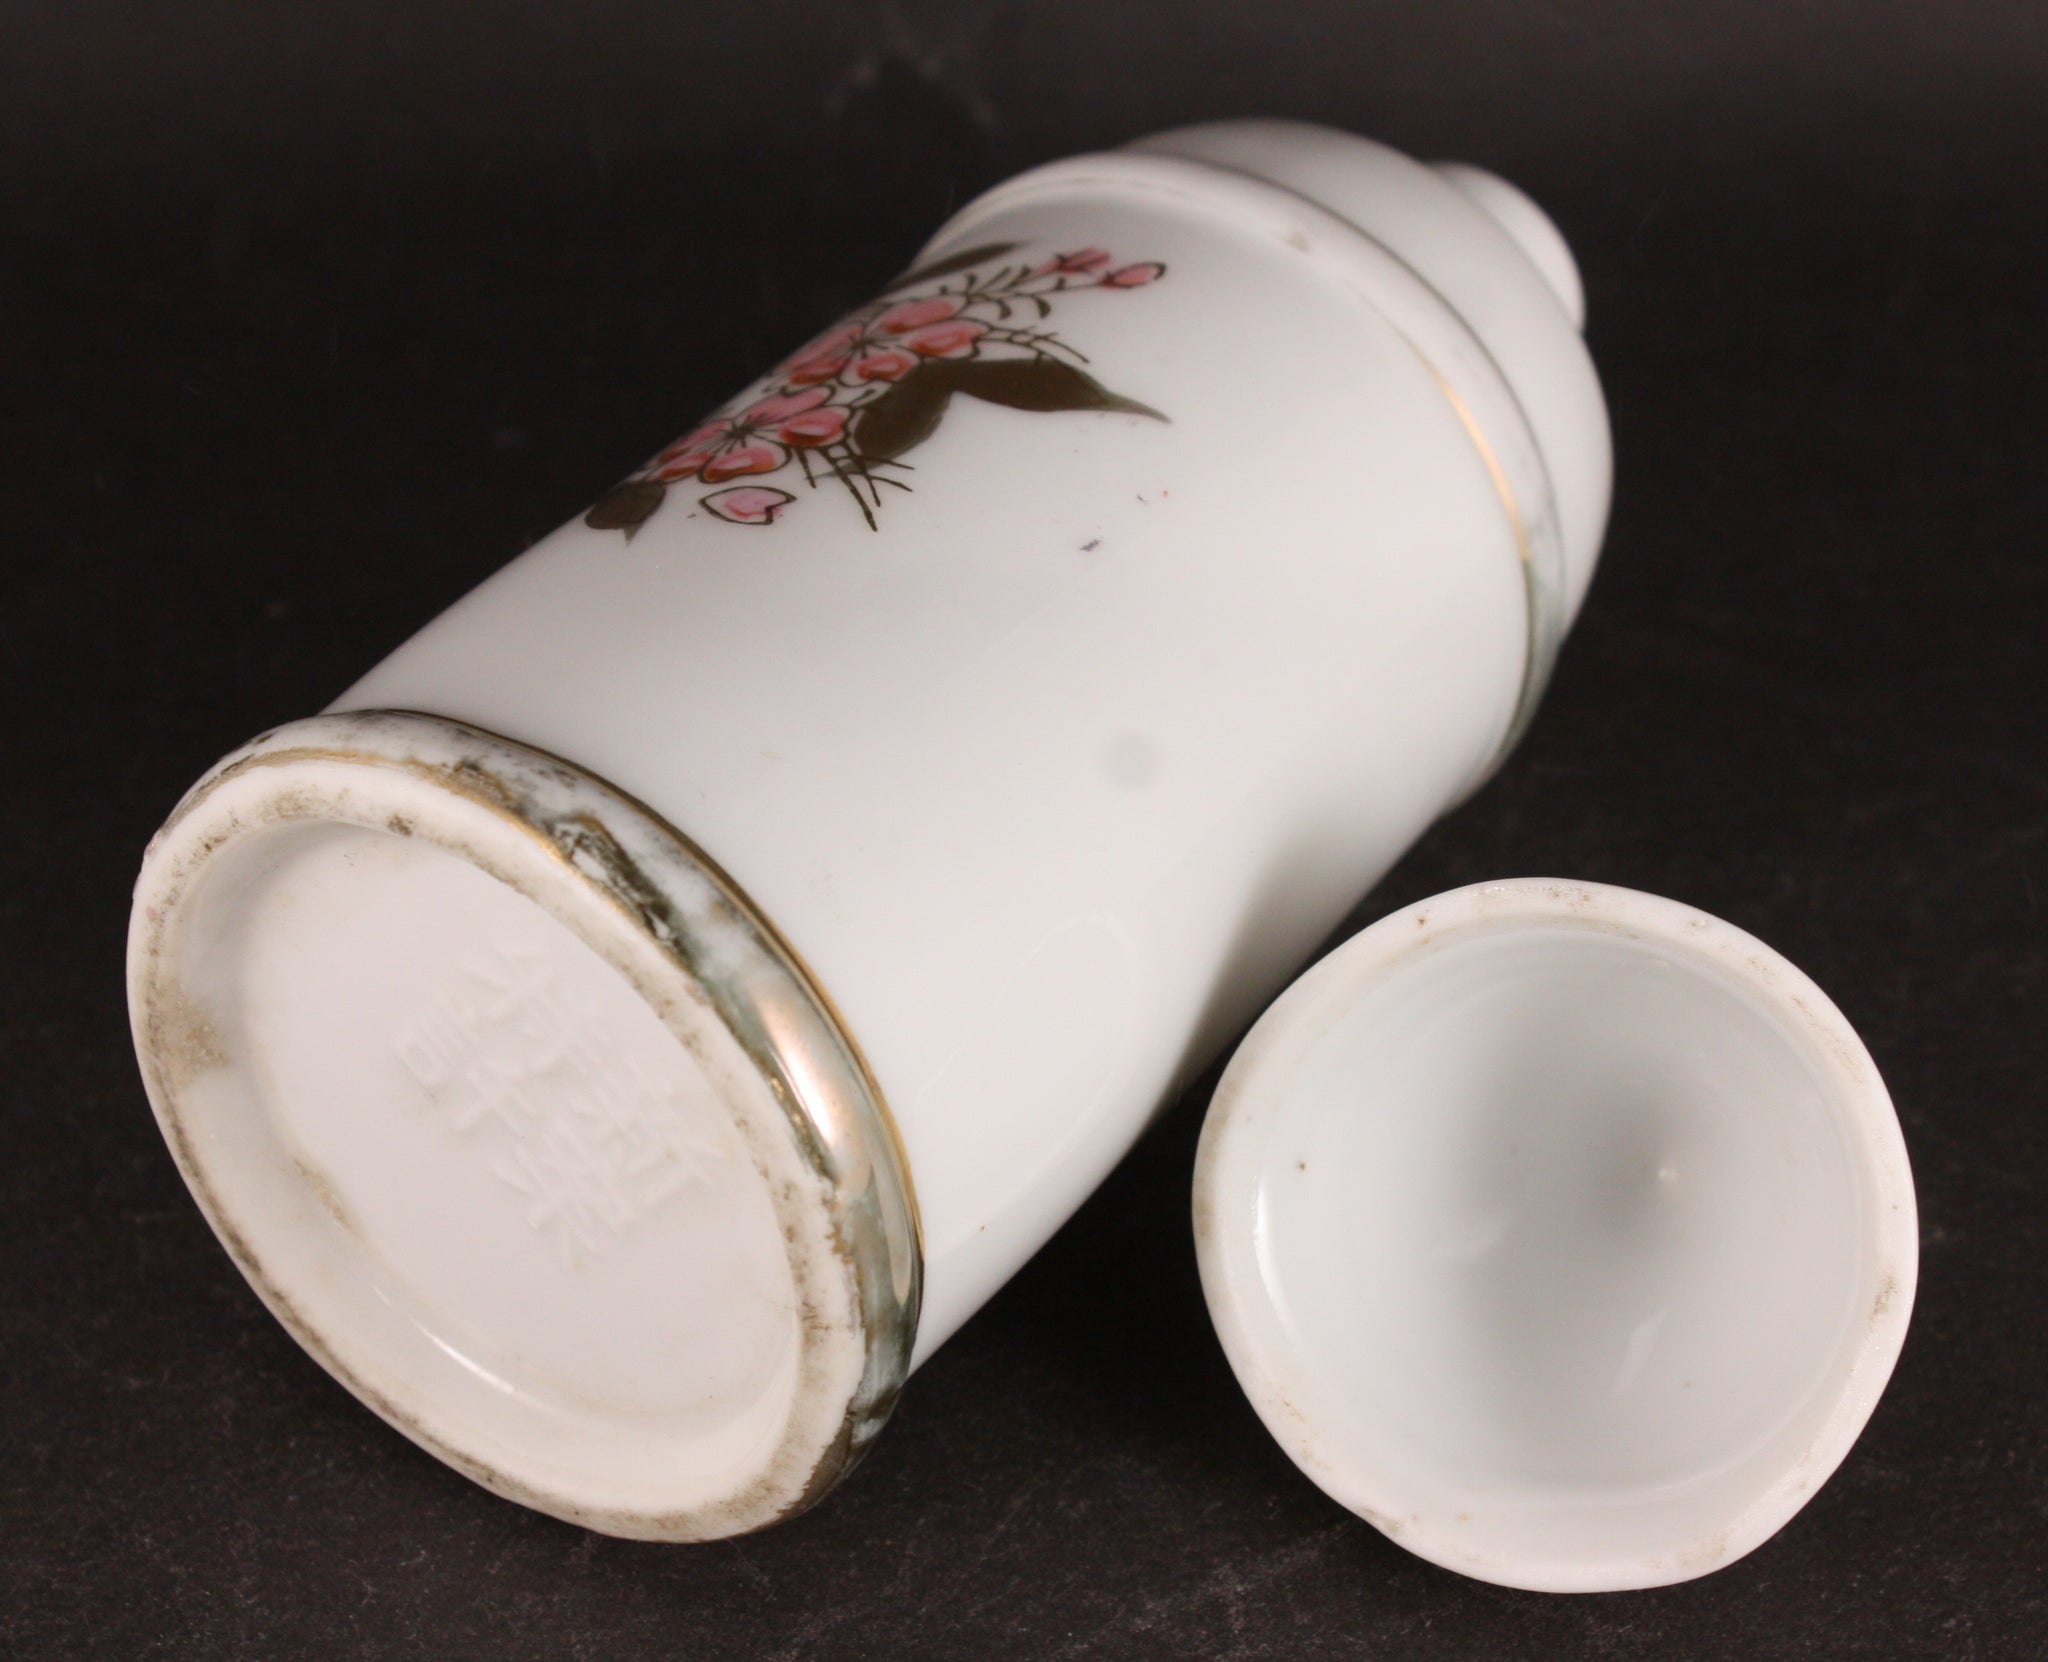 Antique Japanese Military Shell Shaped Infantry Academy Army Sake Bottle